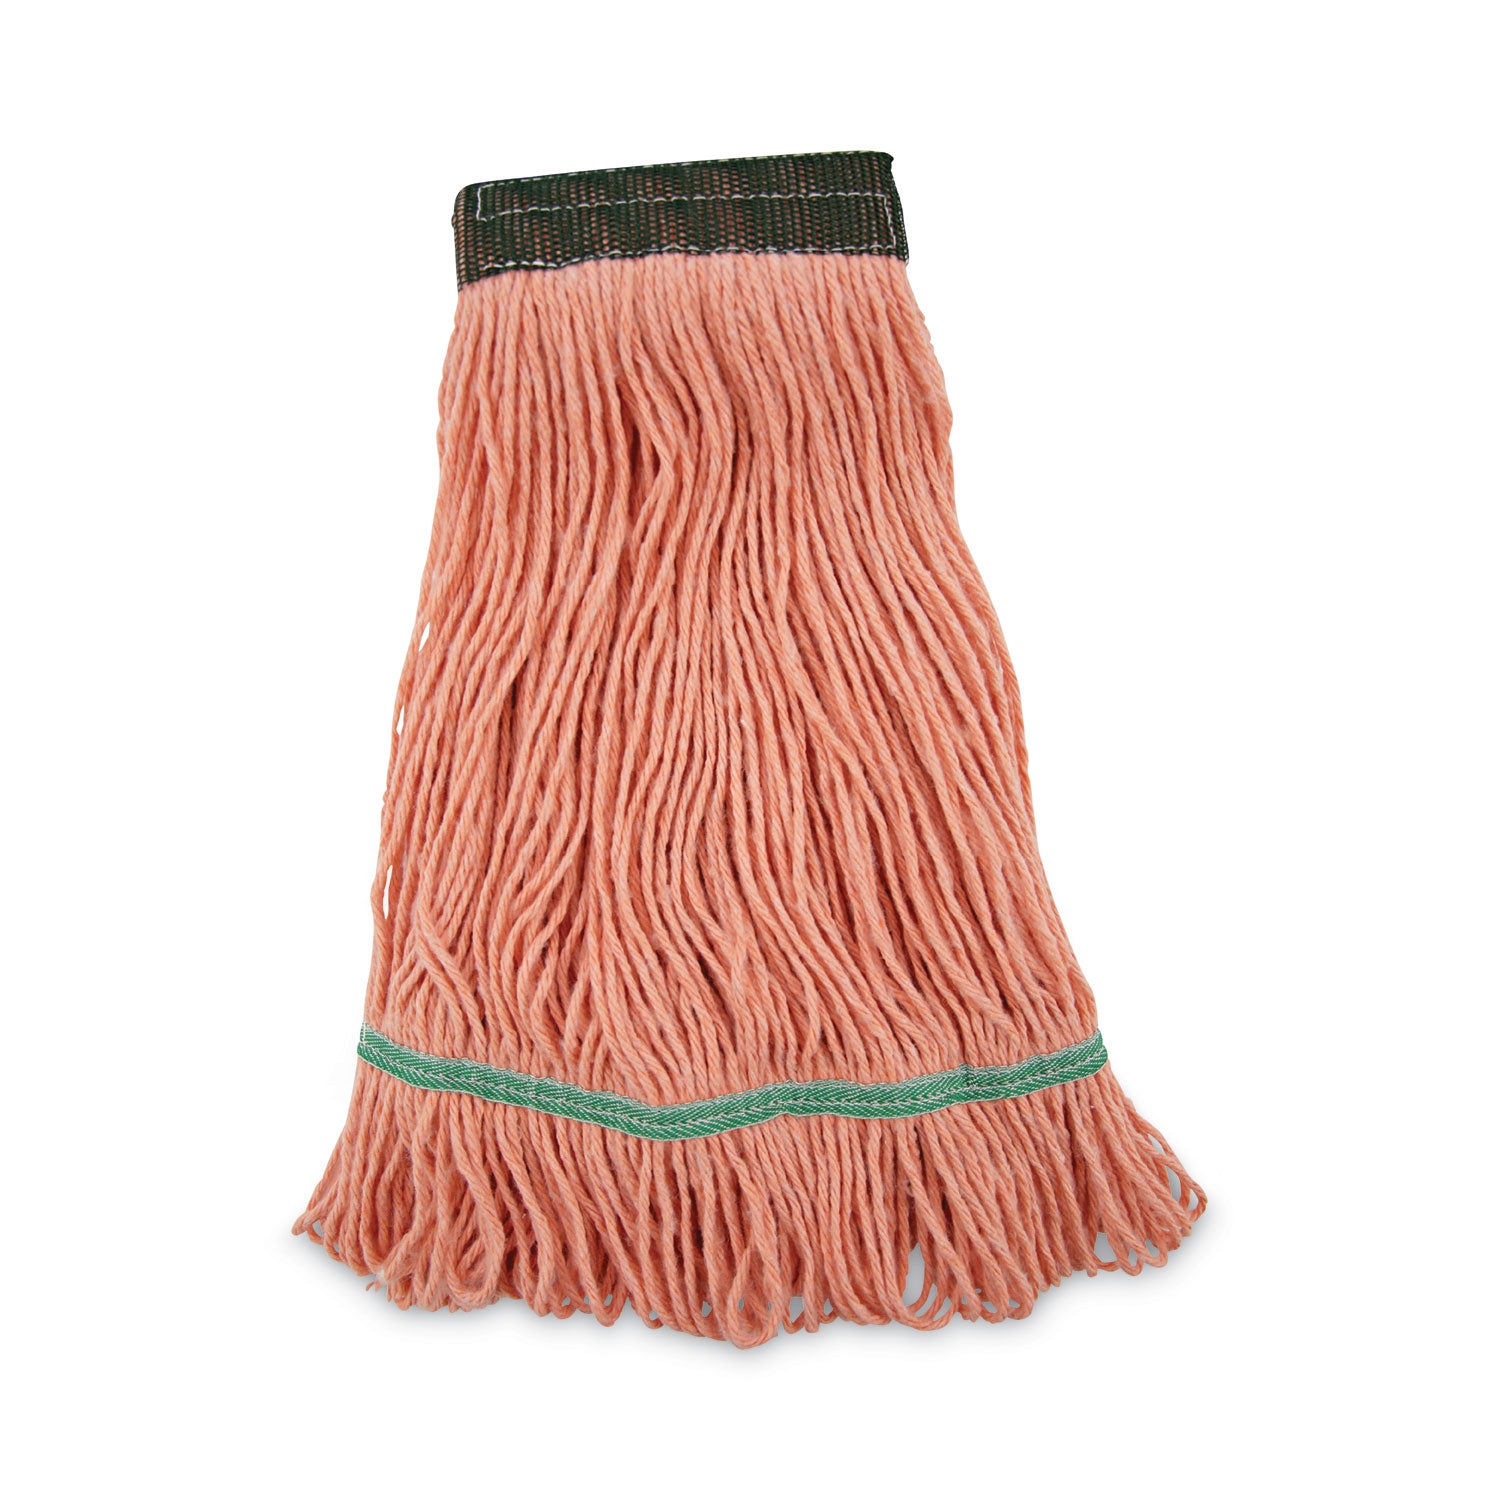 super-loop-wet-mop-head-cotton-synthetic-fiber-5-headband-medium-size-orange-12-carton_bwk502or - 1